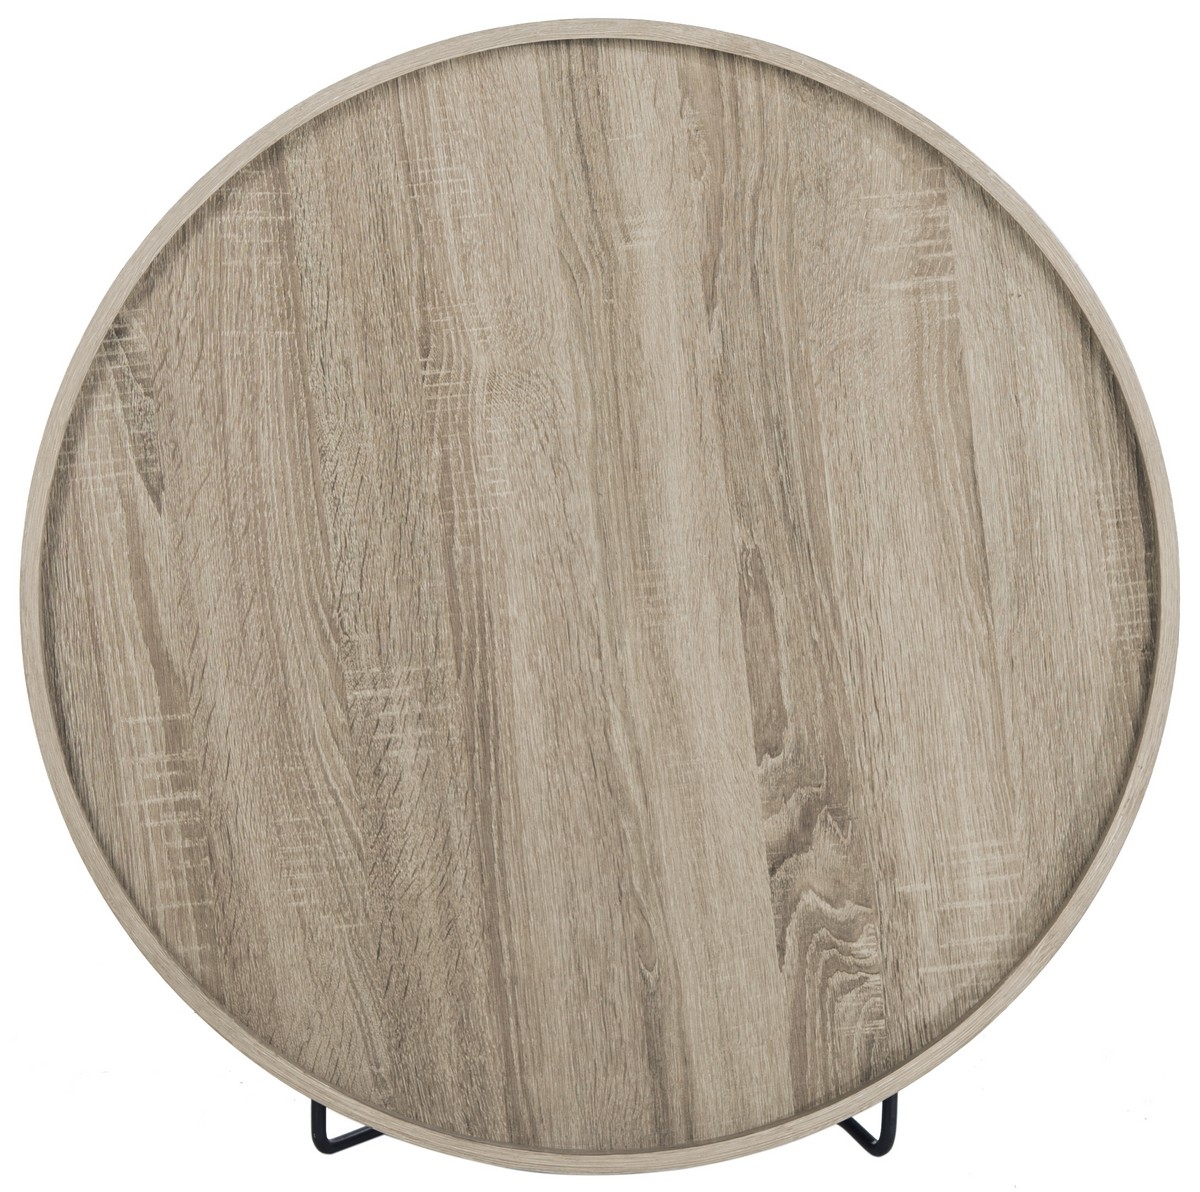 Auden Retro Mid Century Wood Accent Table - Light Oak/Black - Arlo Home - Image 1